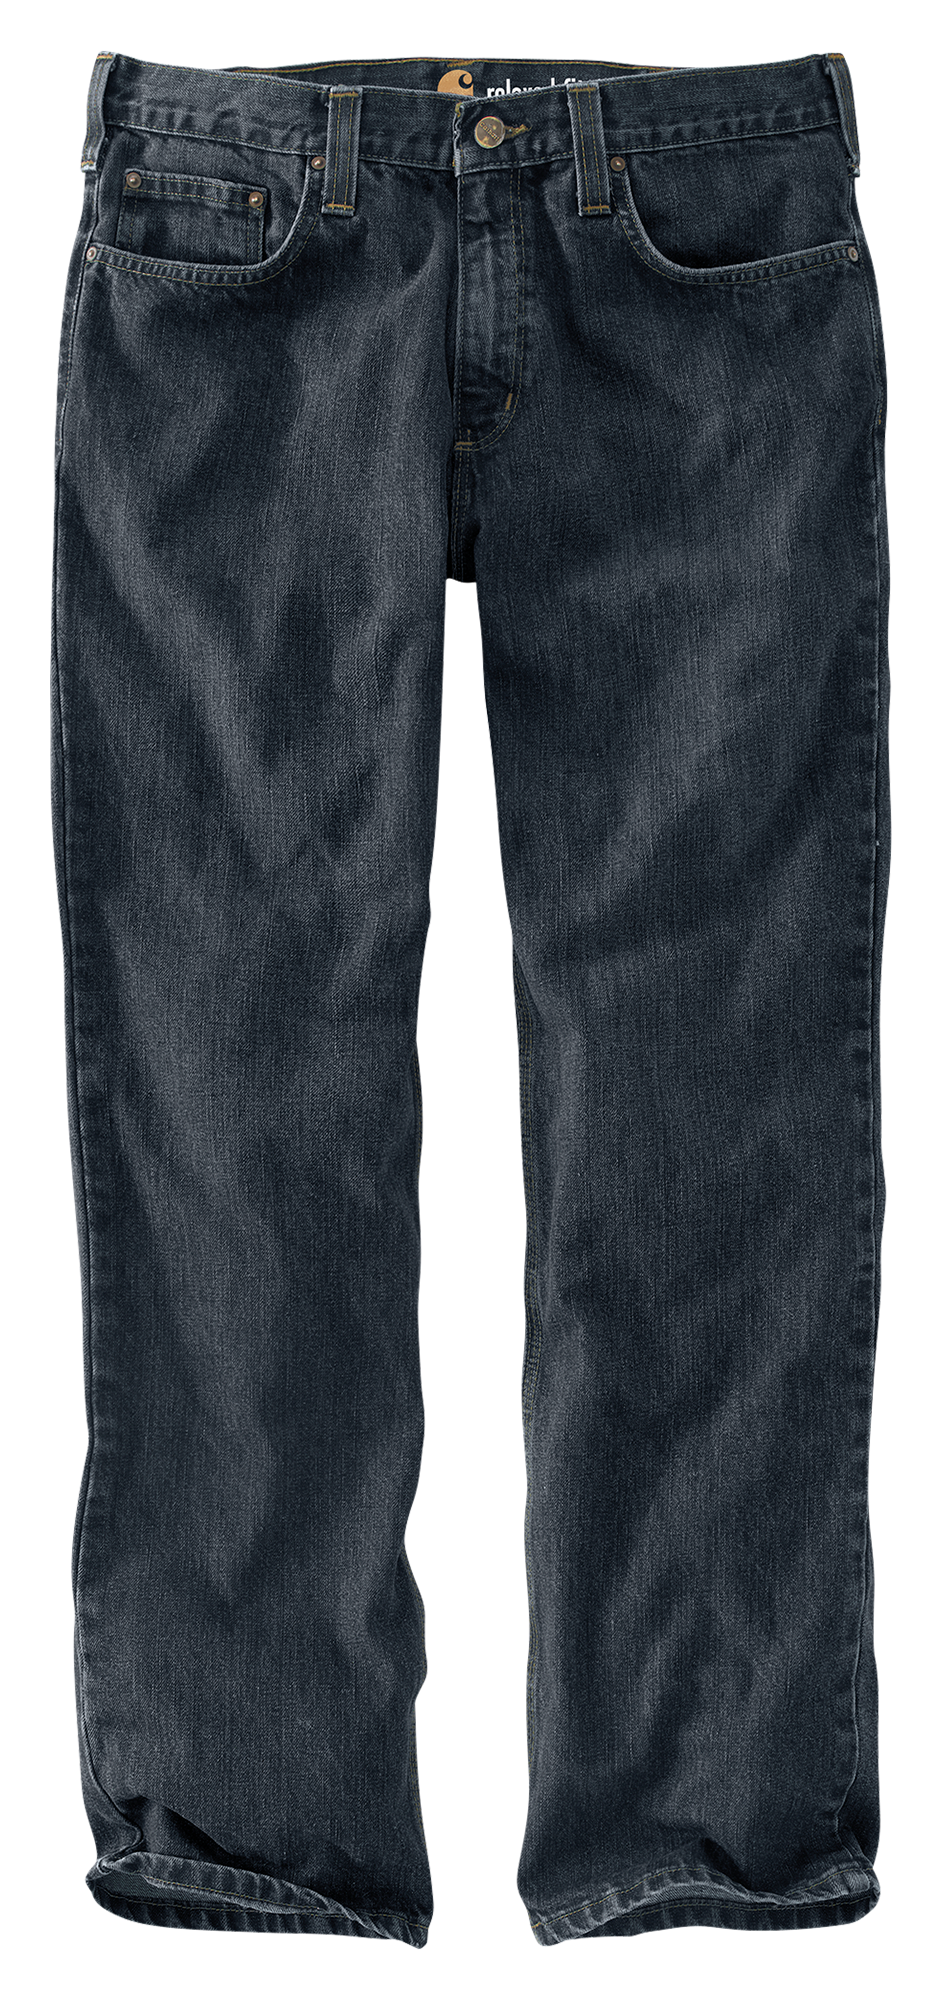 Carhartt mens denim jeans B460DVB Size 42 x 32